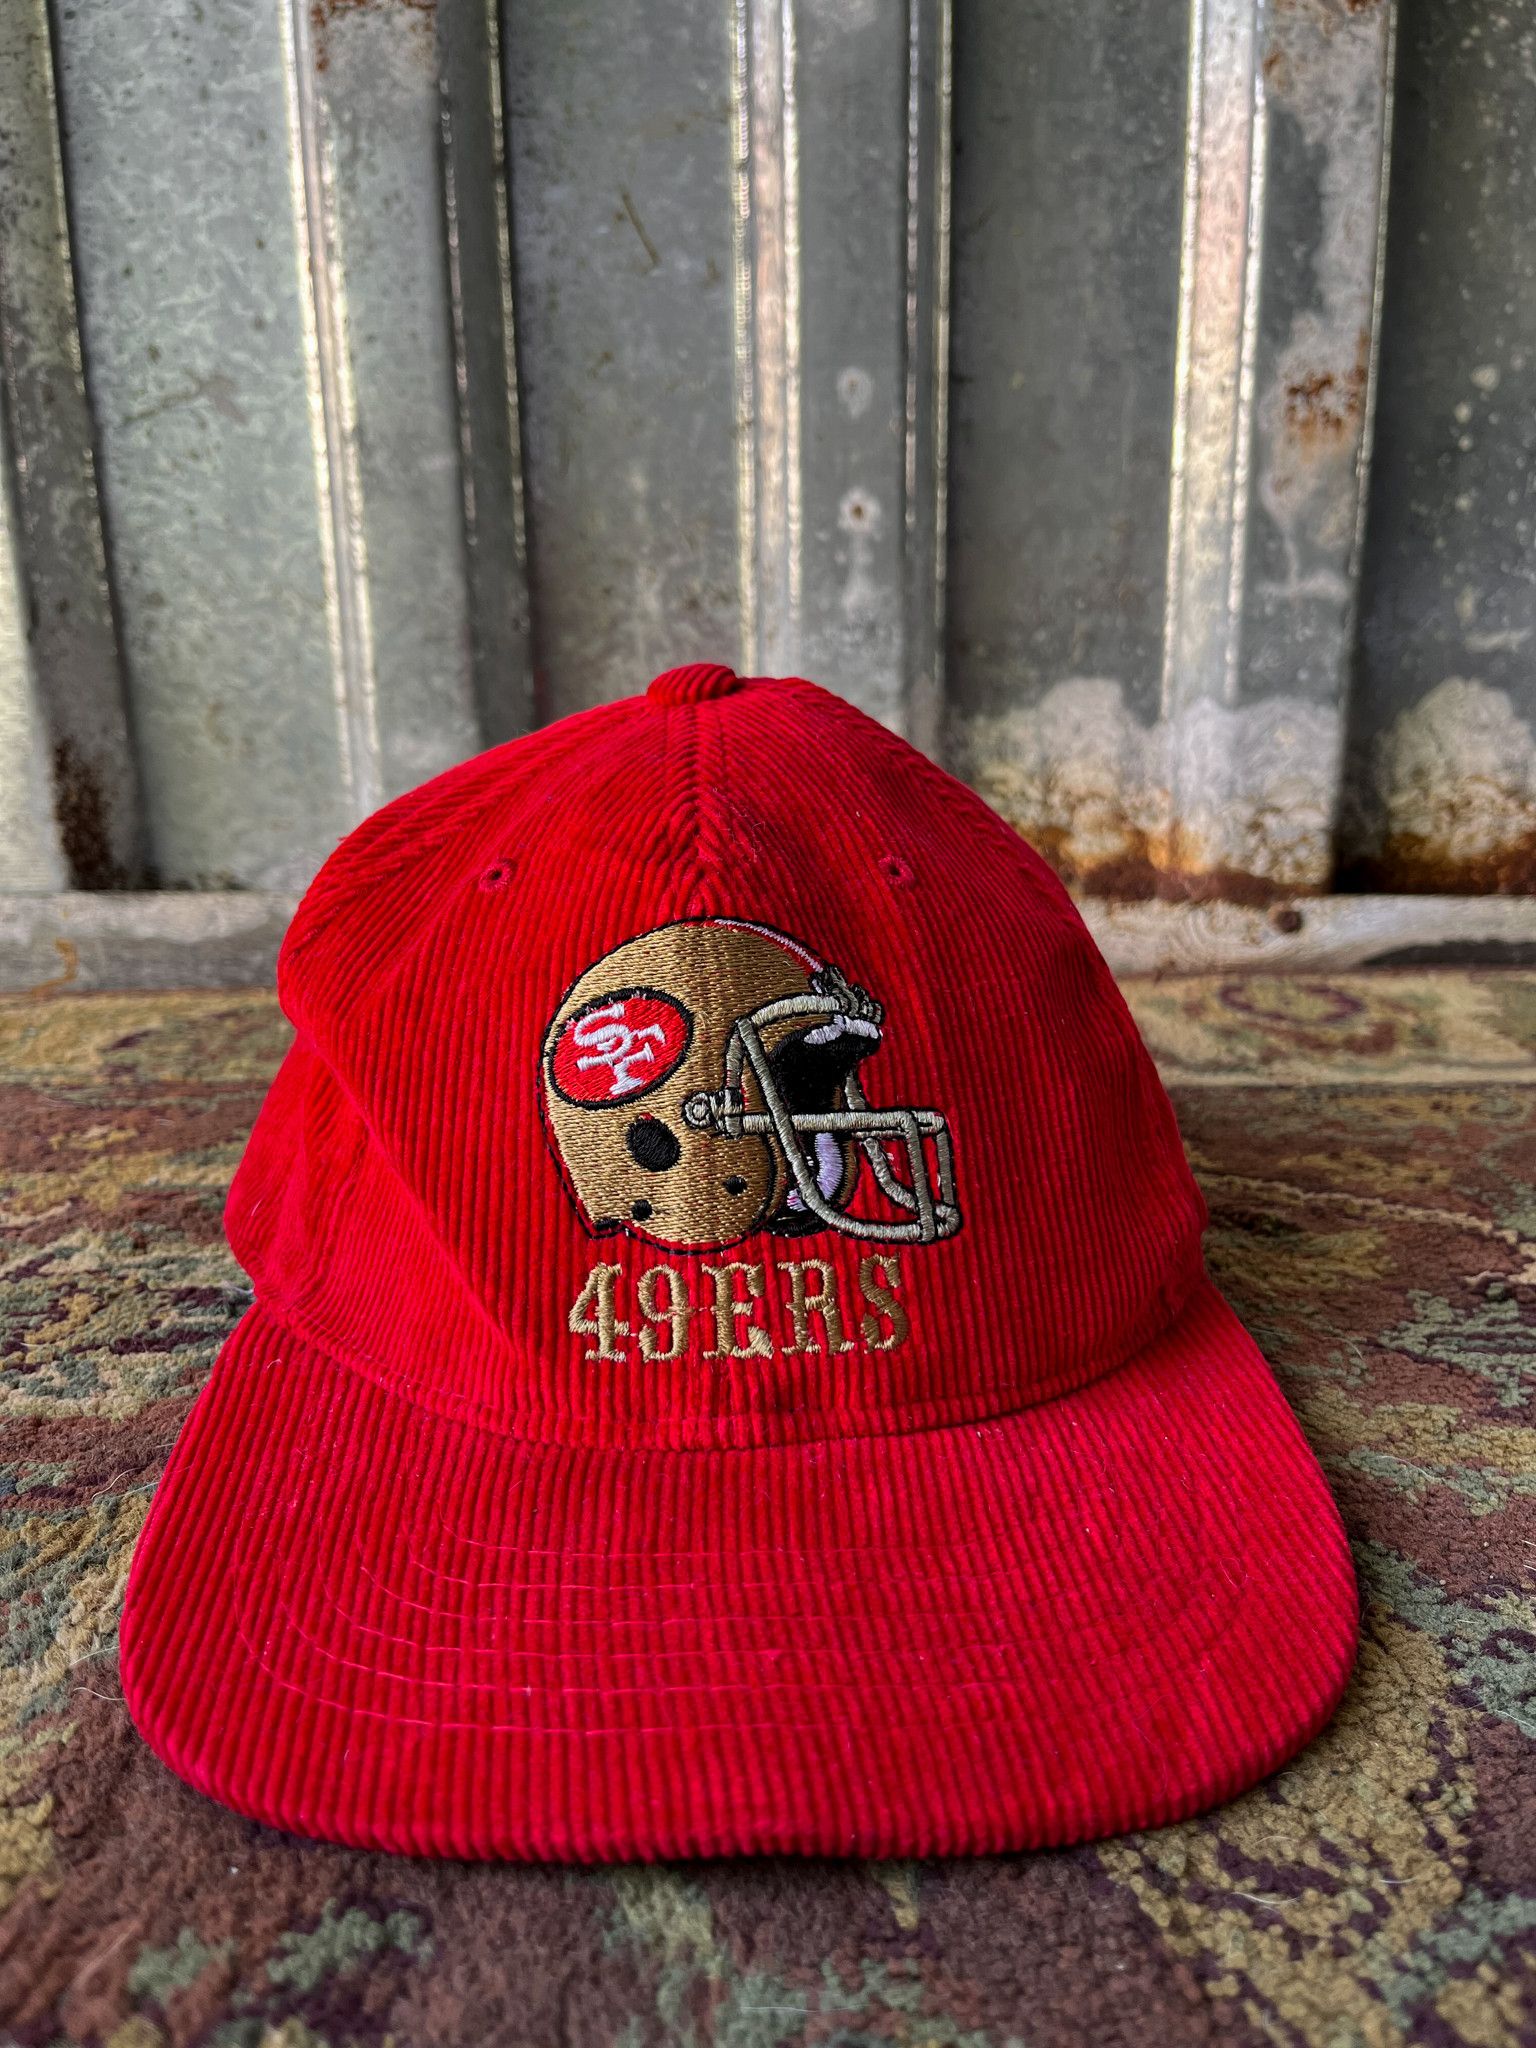 corduroy 49ers hat